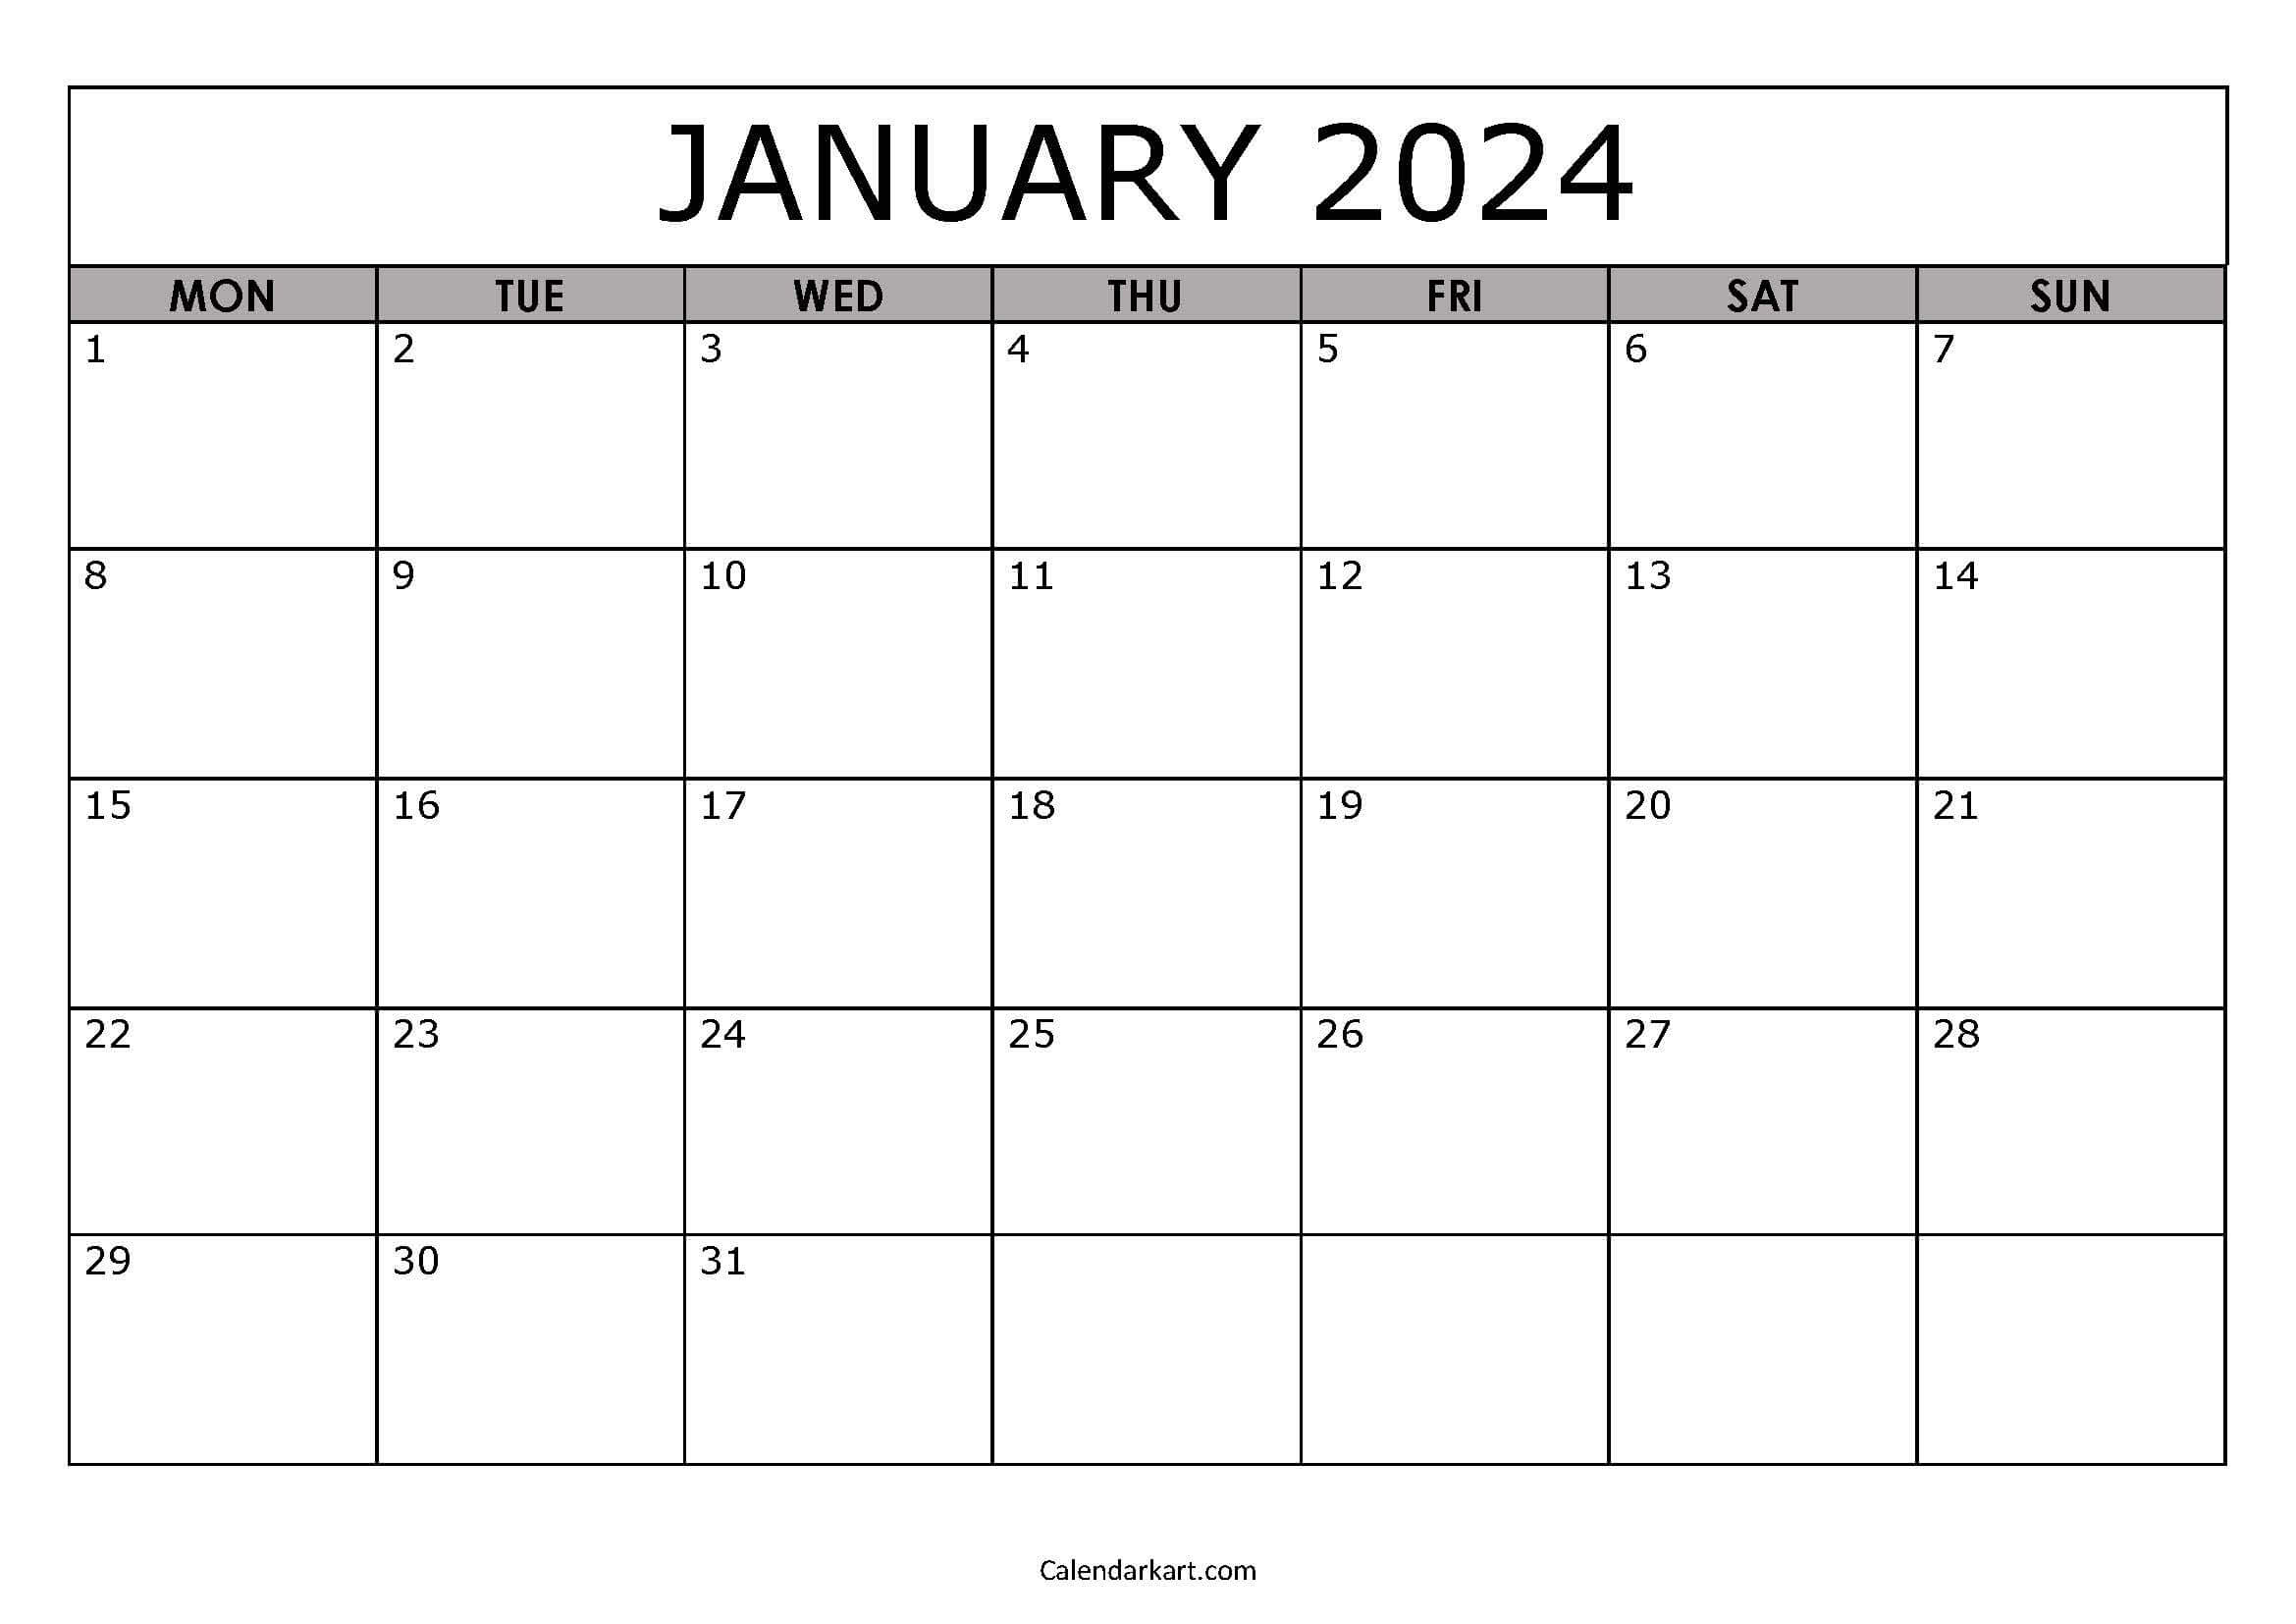 Free Printable January 2024 Calendars - Calendarkart with regard to Free Printable Calendar 2024 Starting With Monday